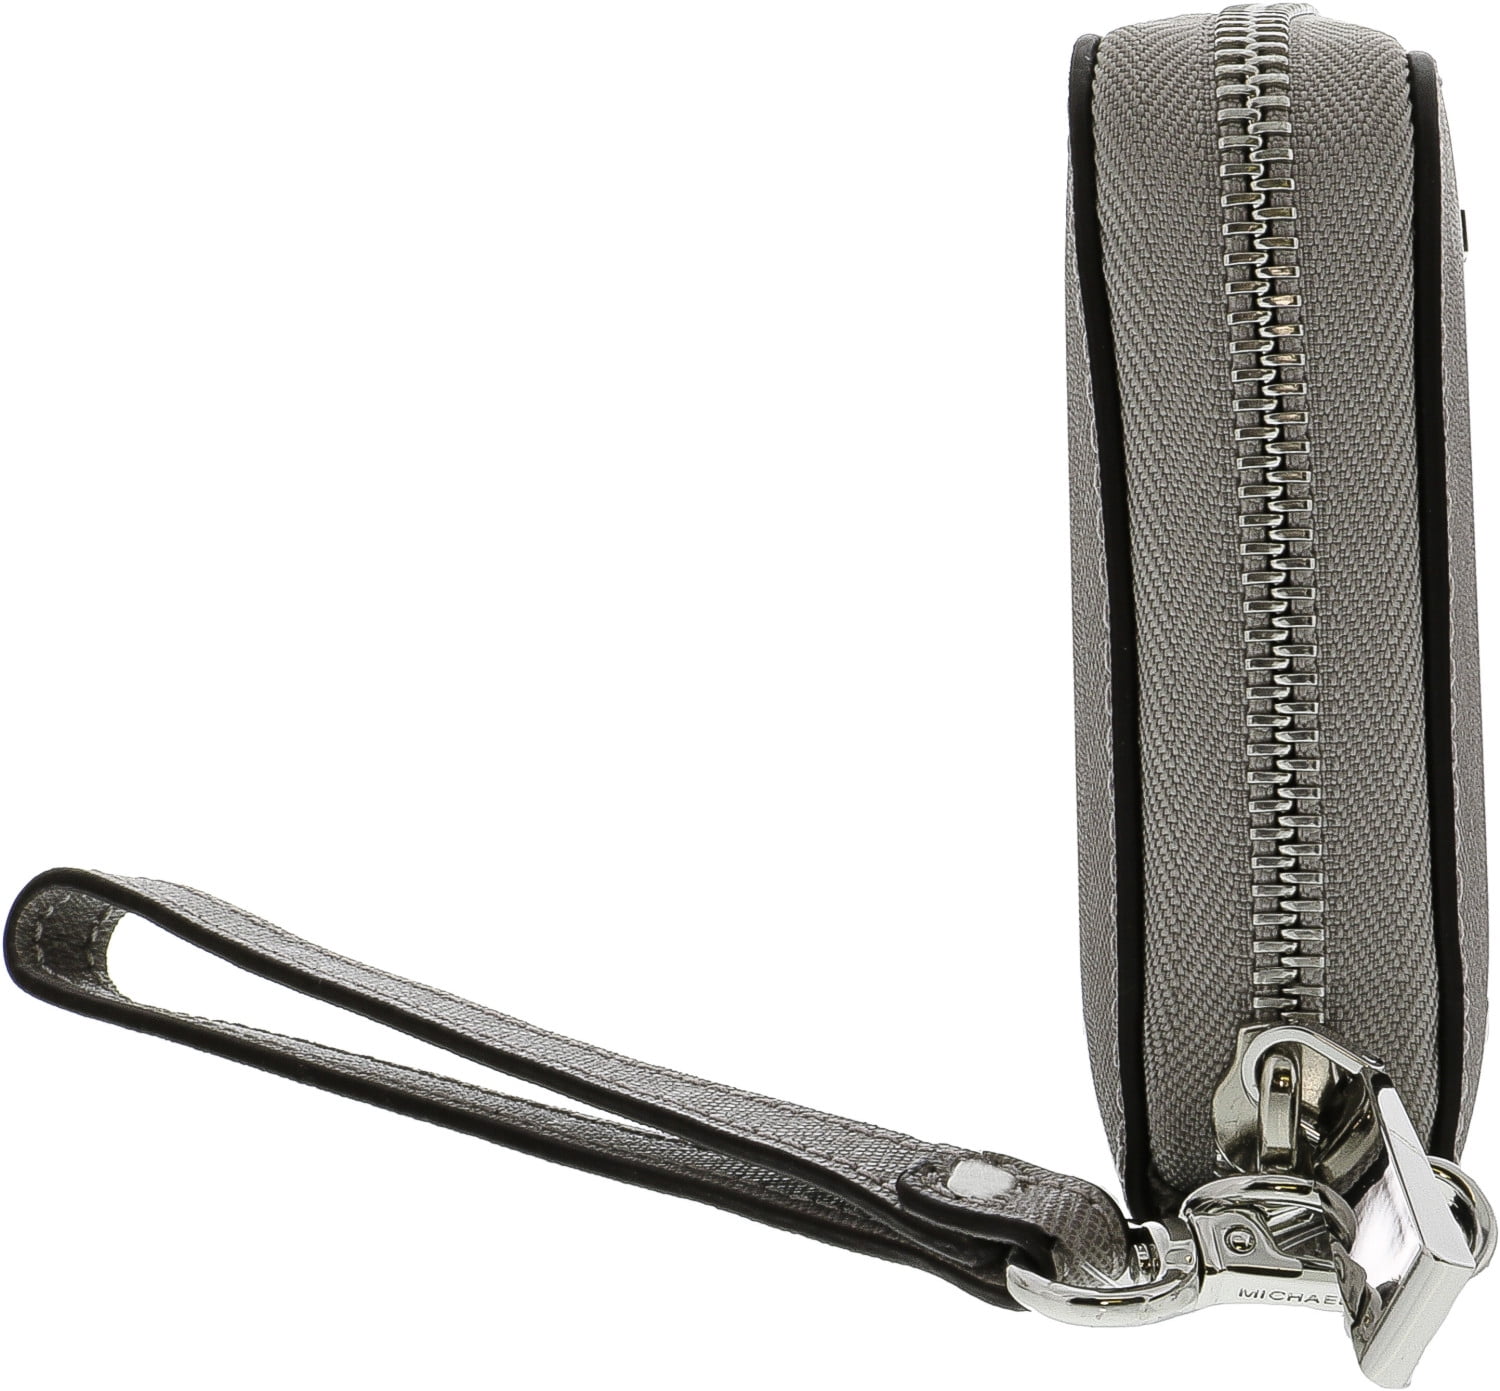 Michael Kors Jet Set Saffiano Brown Leather Continental Zip Around Wallet  Women  eBay